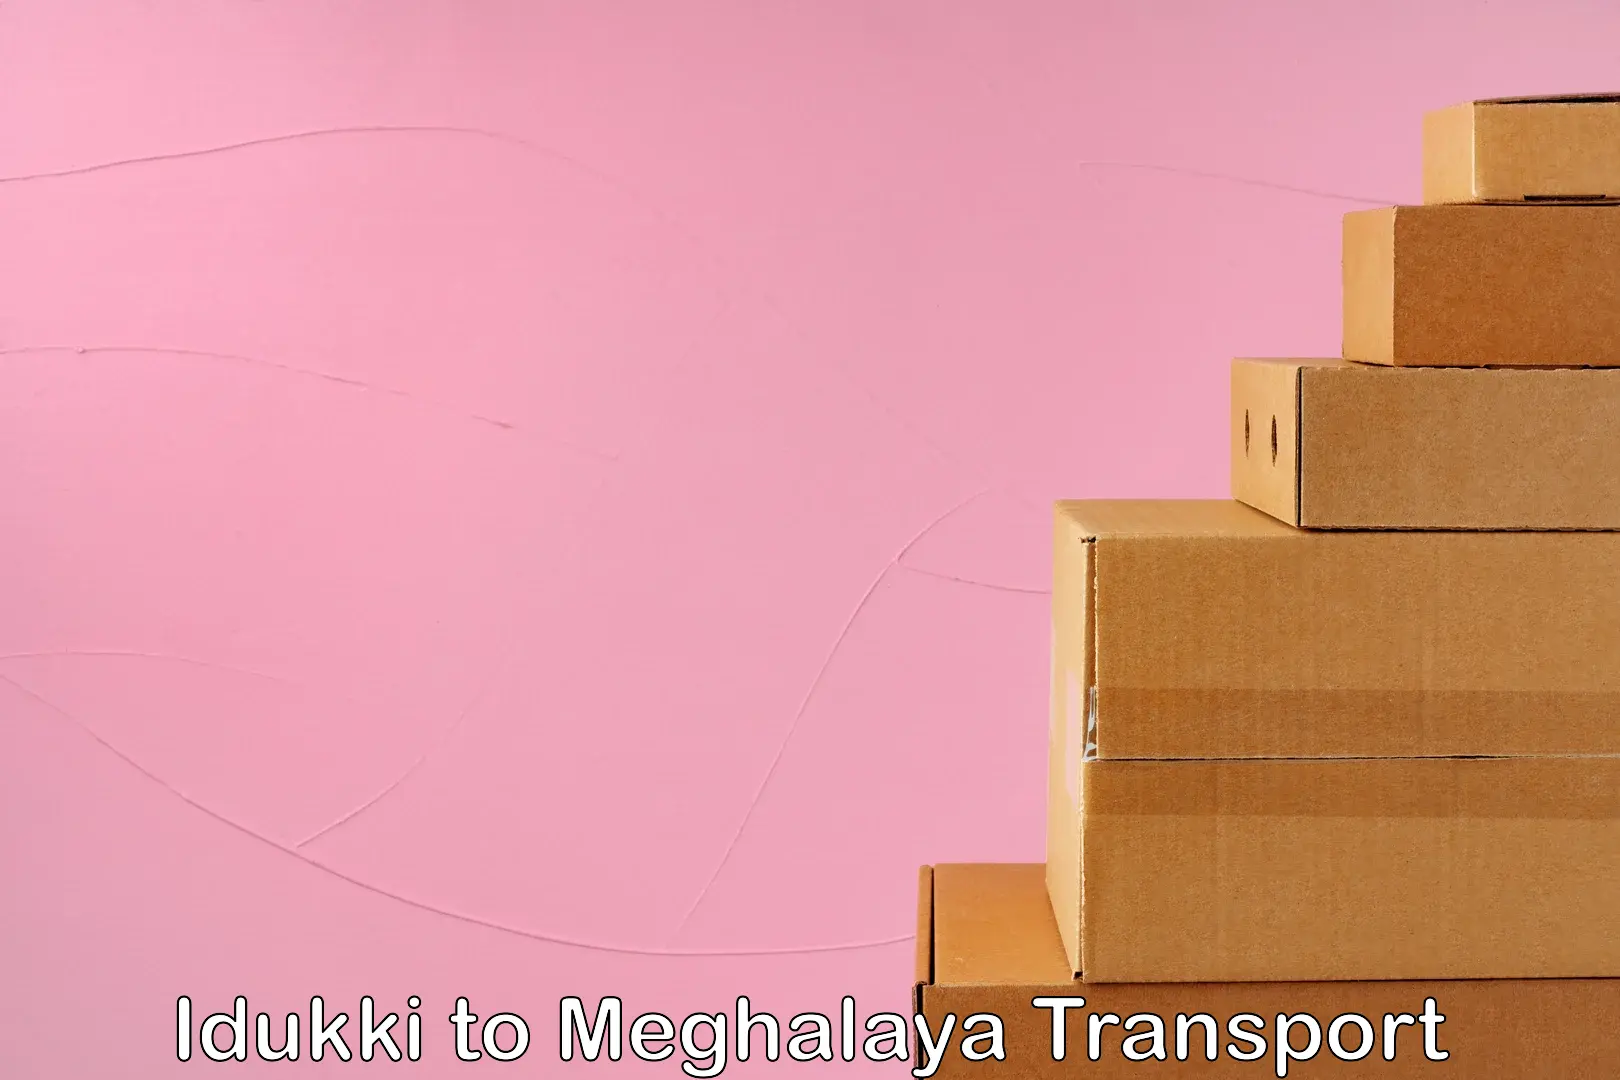 Delivery service Idukki to Meghalaya